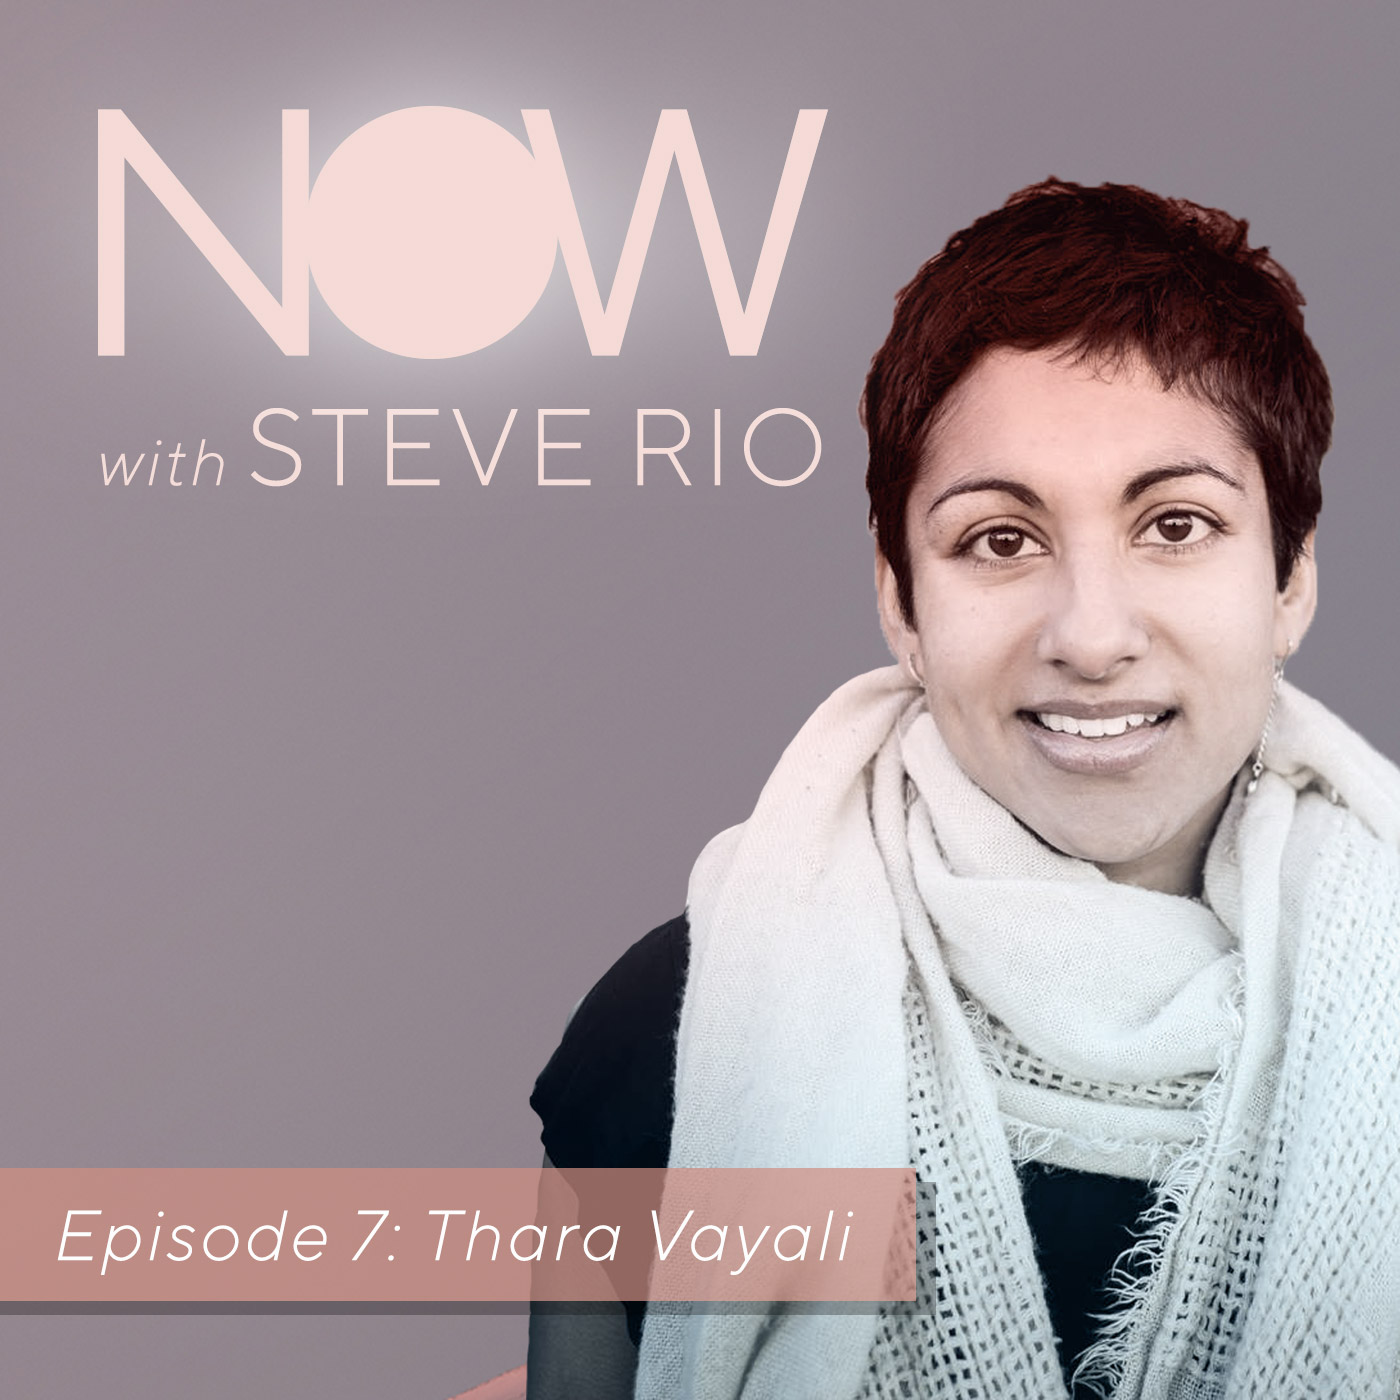 Thara Viayali on NOW with Steve Rio